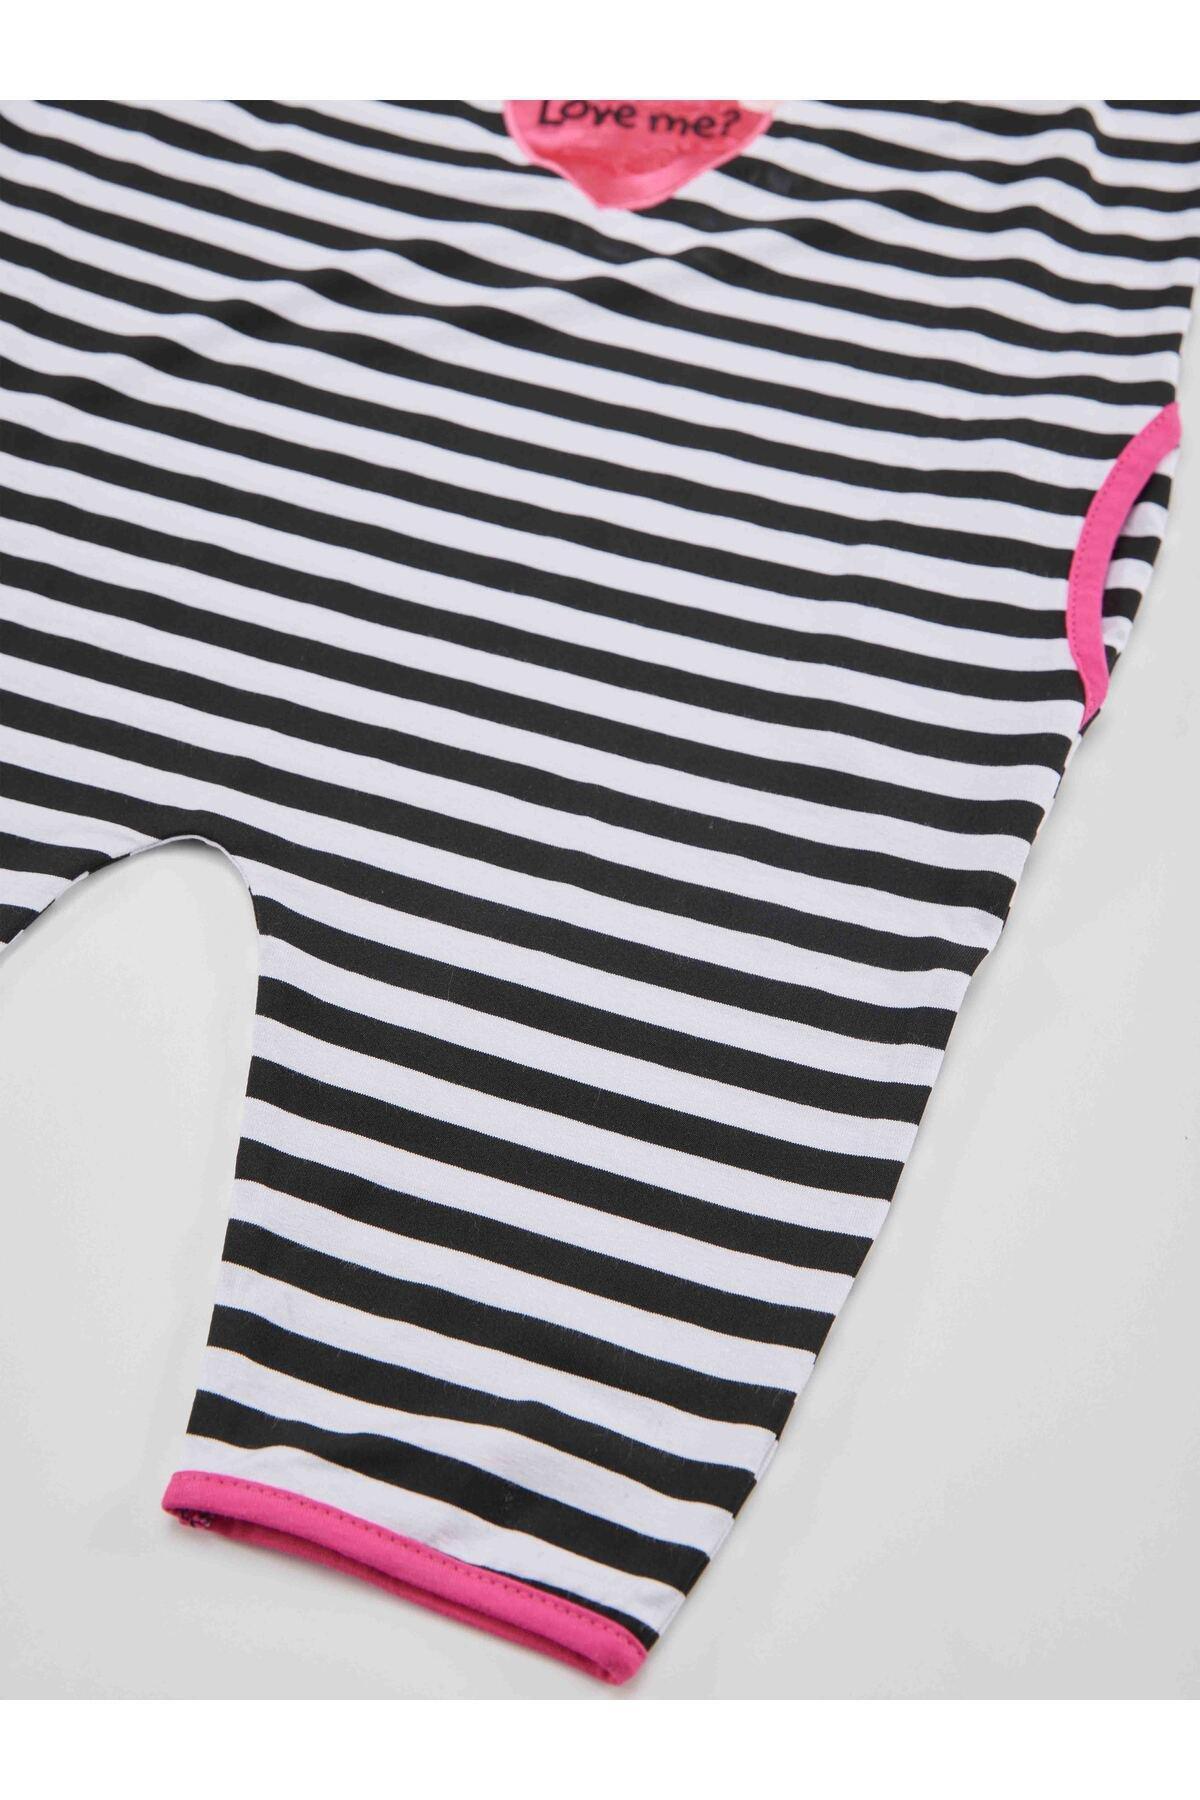 Denokids - Black Striped Printed Jumpsuit, Kids Girls